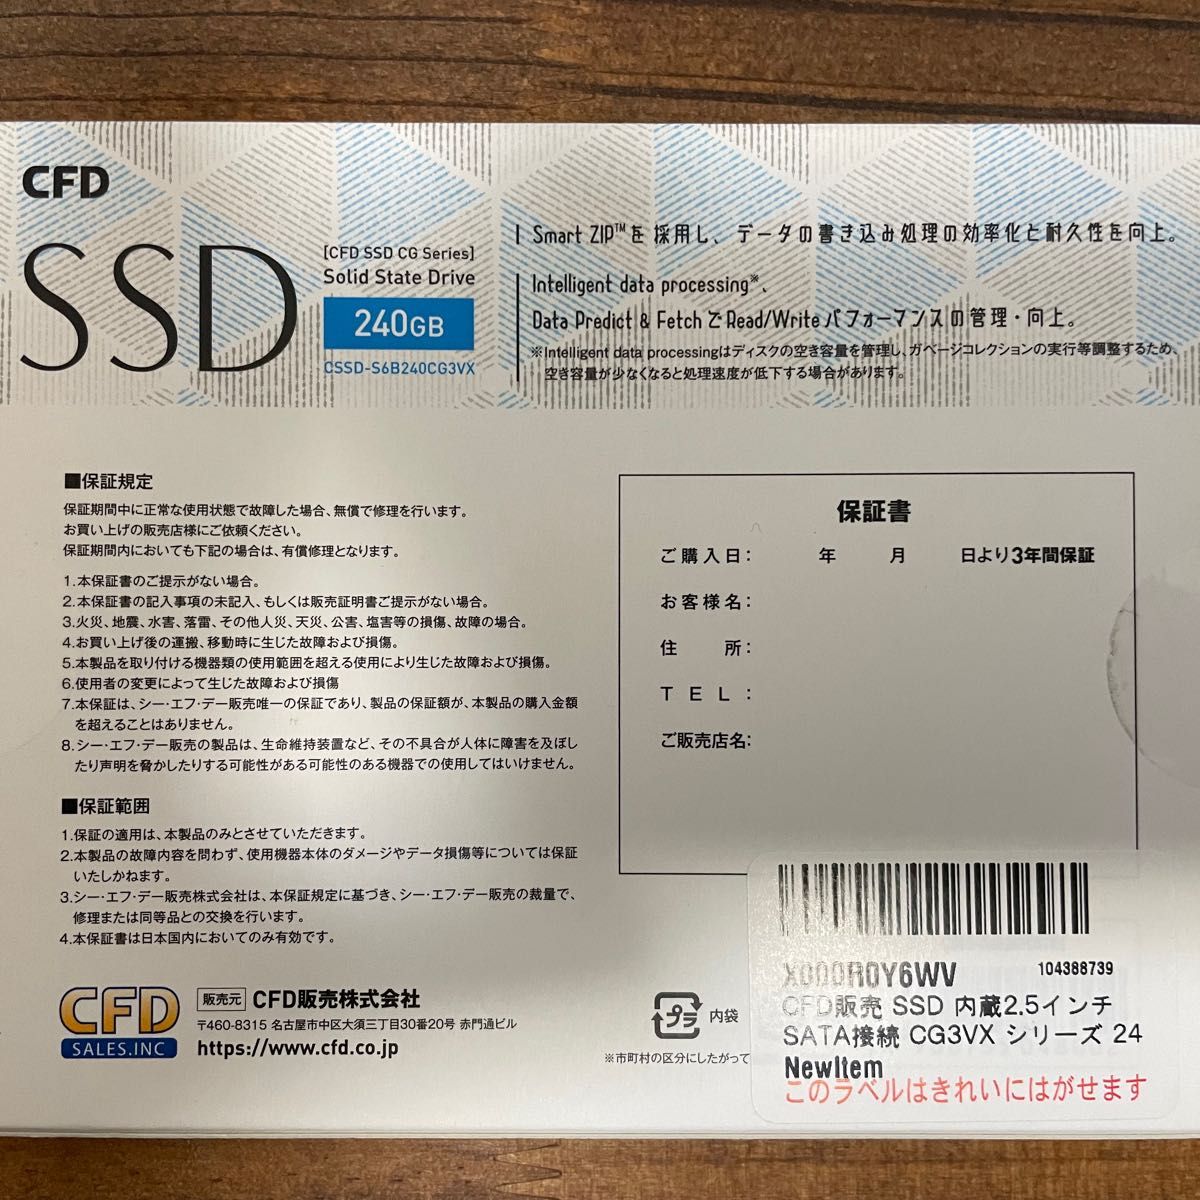 CFD 5インチ 内蔵用SSD 240GB CSSD-S6B240CG3VX｜PayPayフリマ